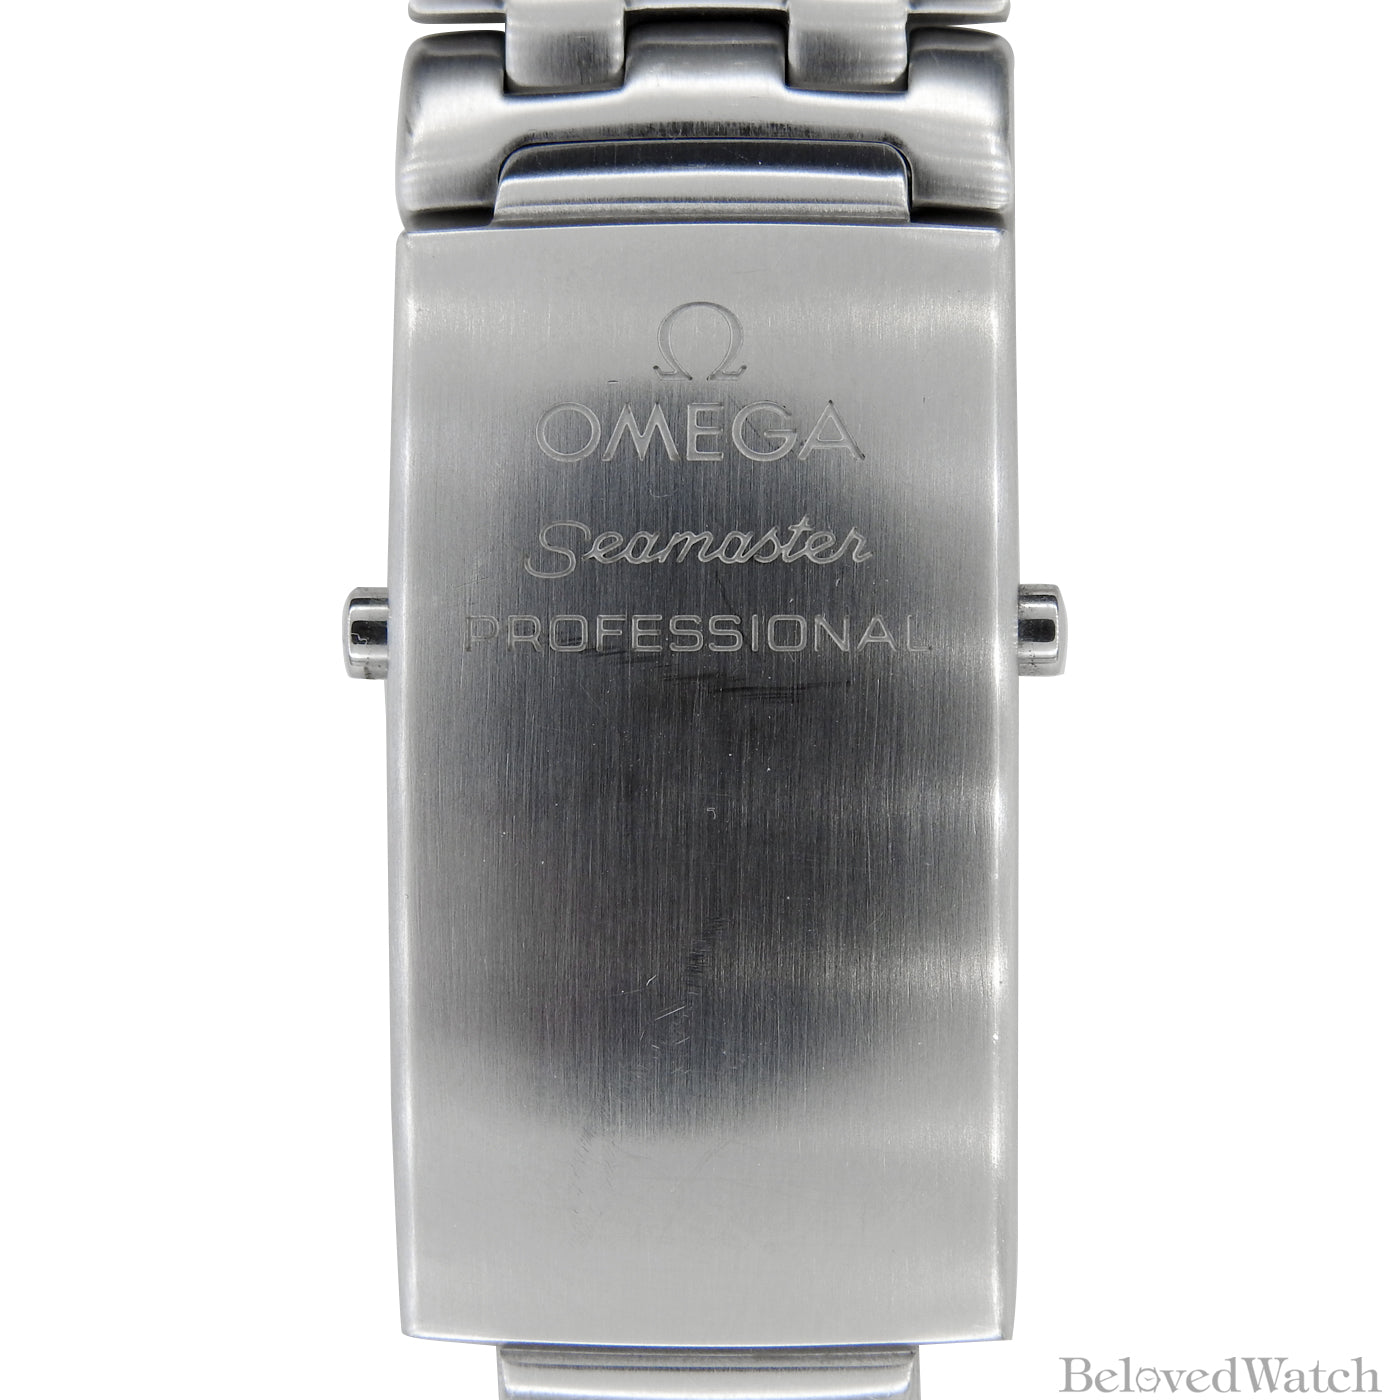 Omega Seamaster Chronograph Professional 2225.80.00